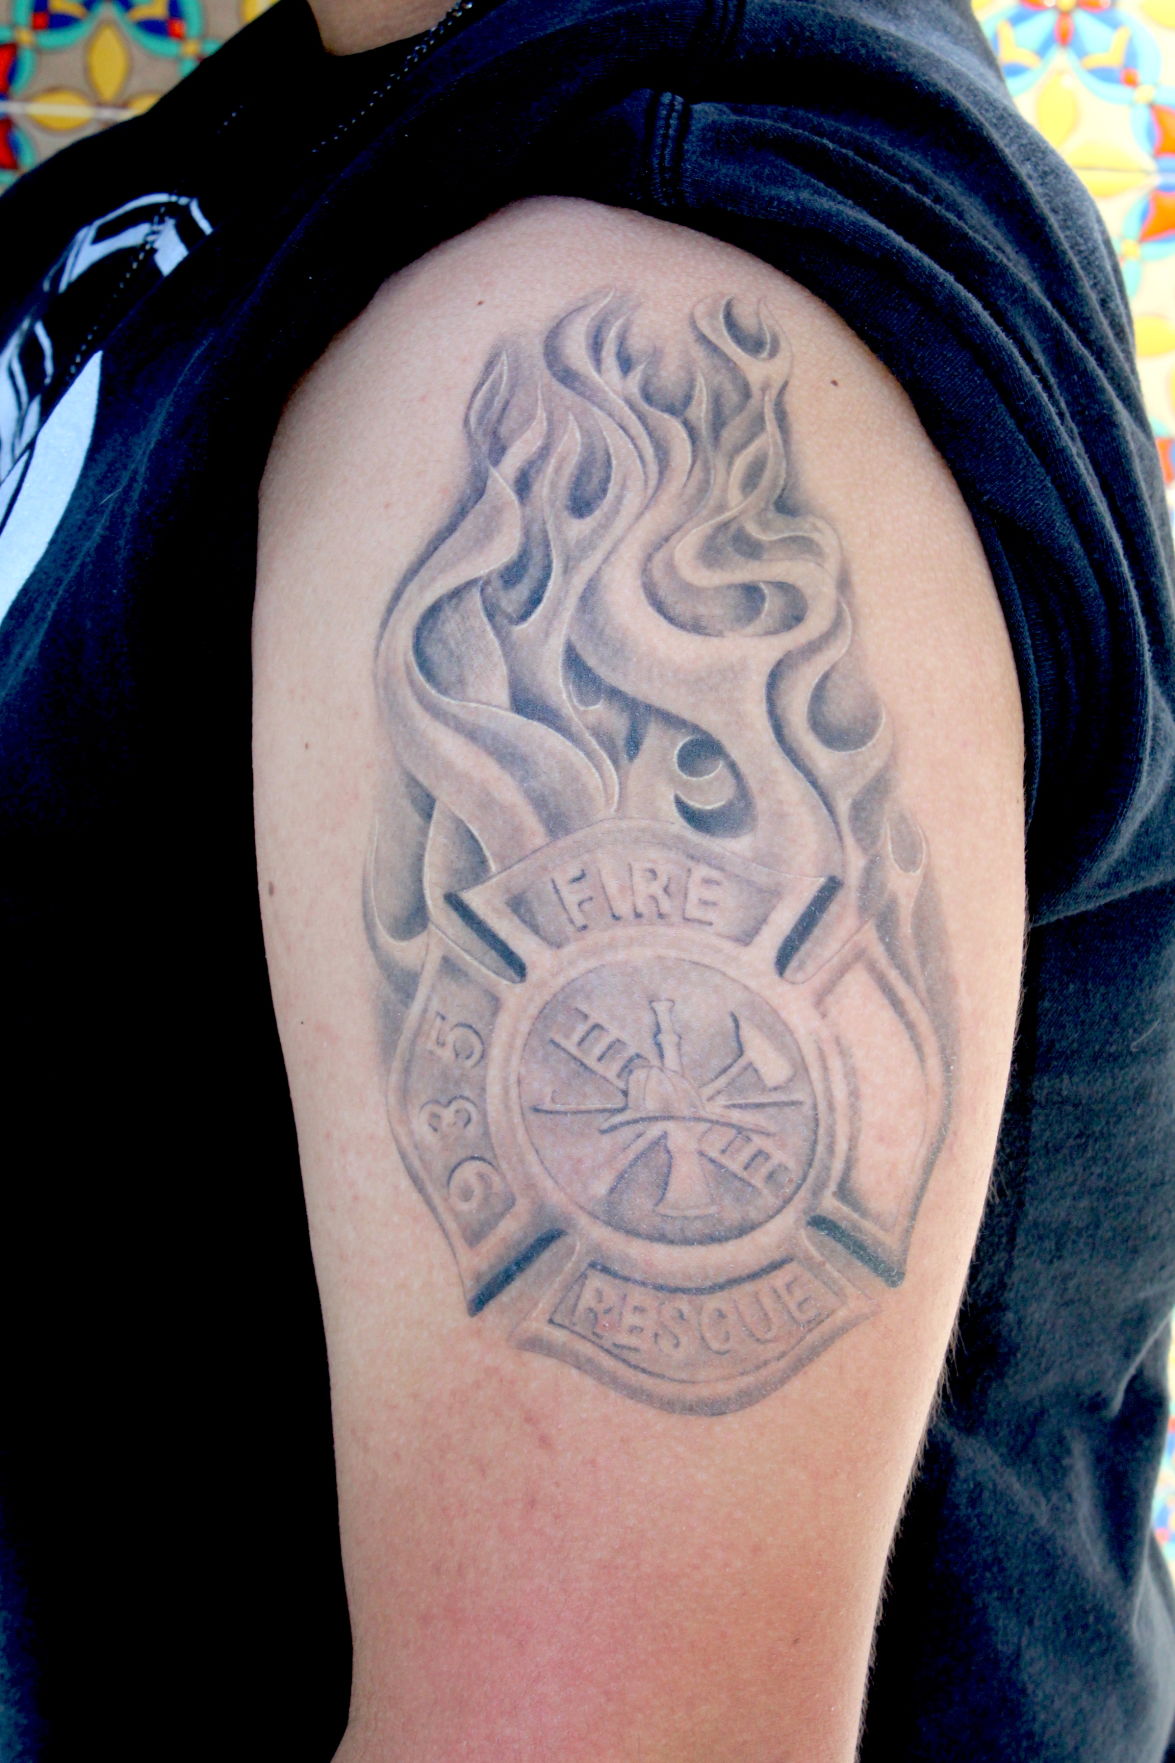 Firefighter sleeve | Fire fighter tattoos, Firefighter tattoo sleeve,  Fireman tattoo